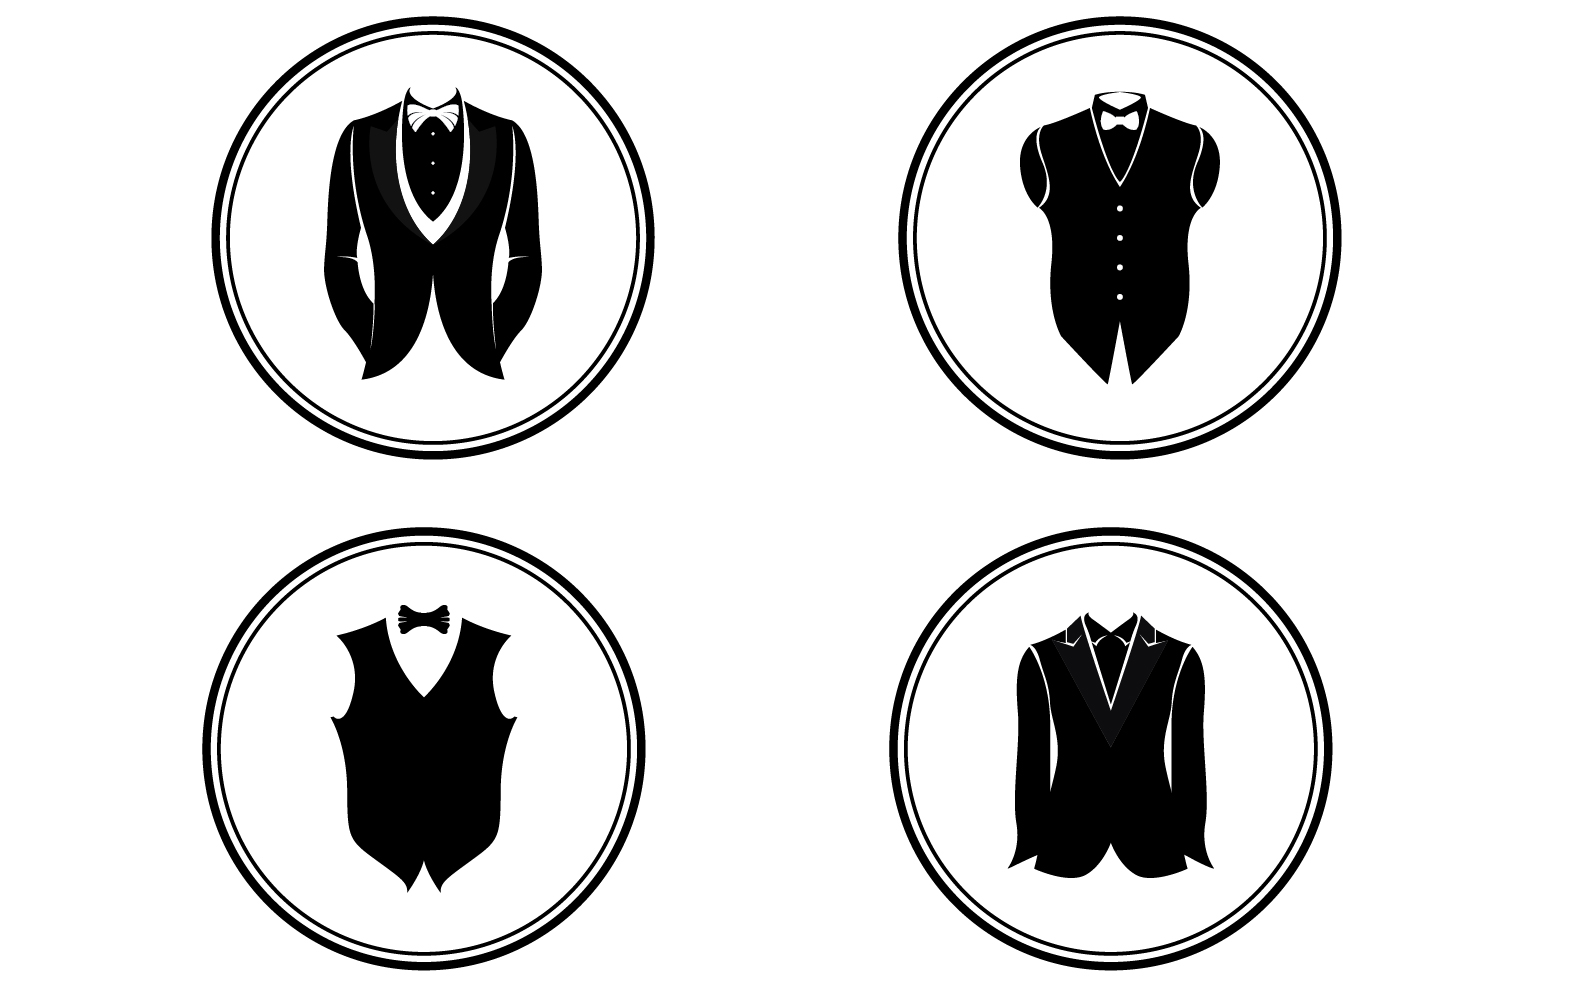 Maid suit logo and symbol vector design v19